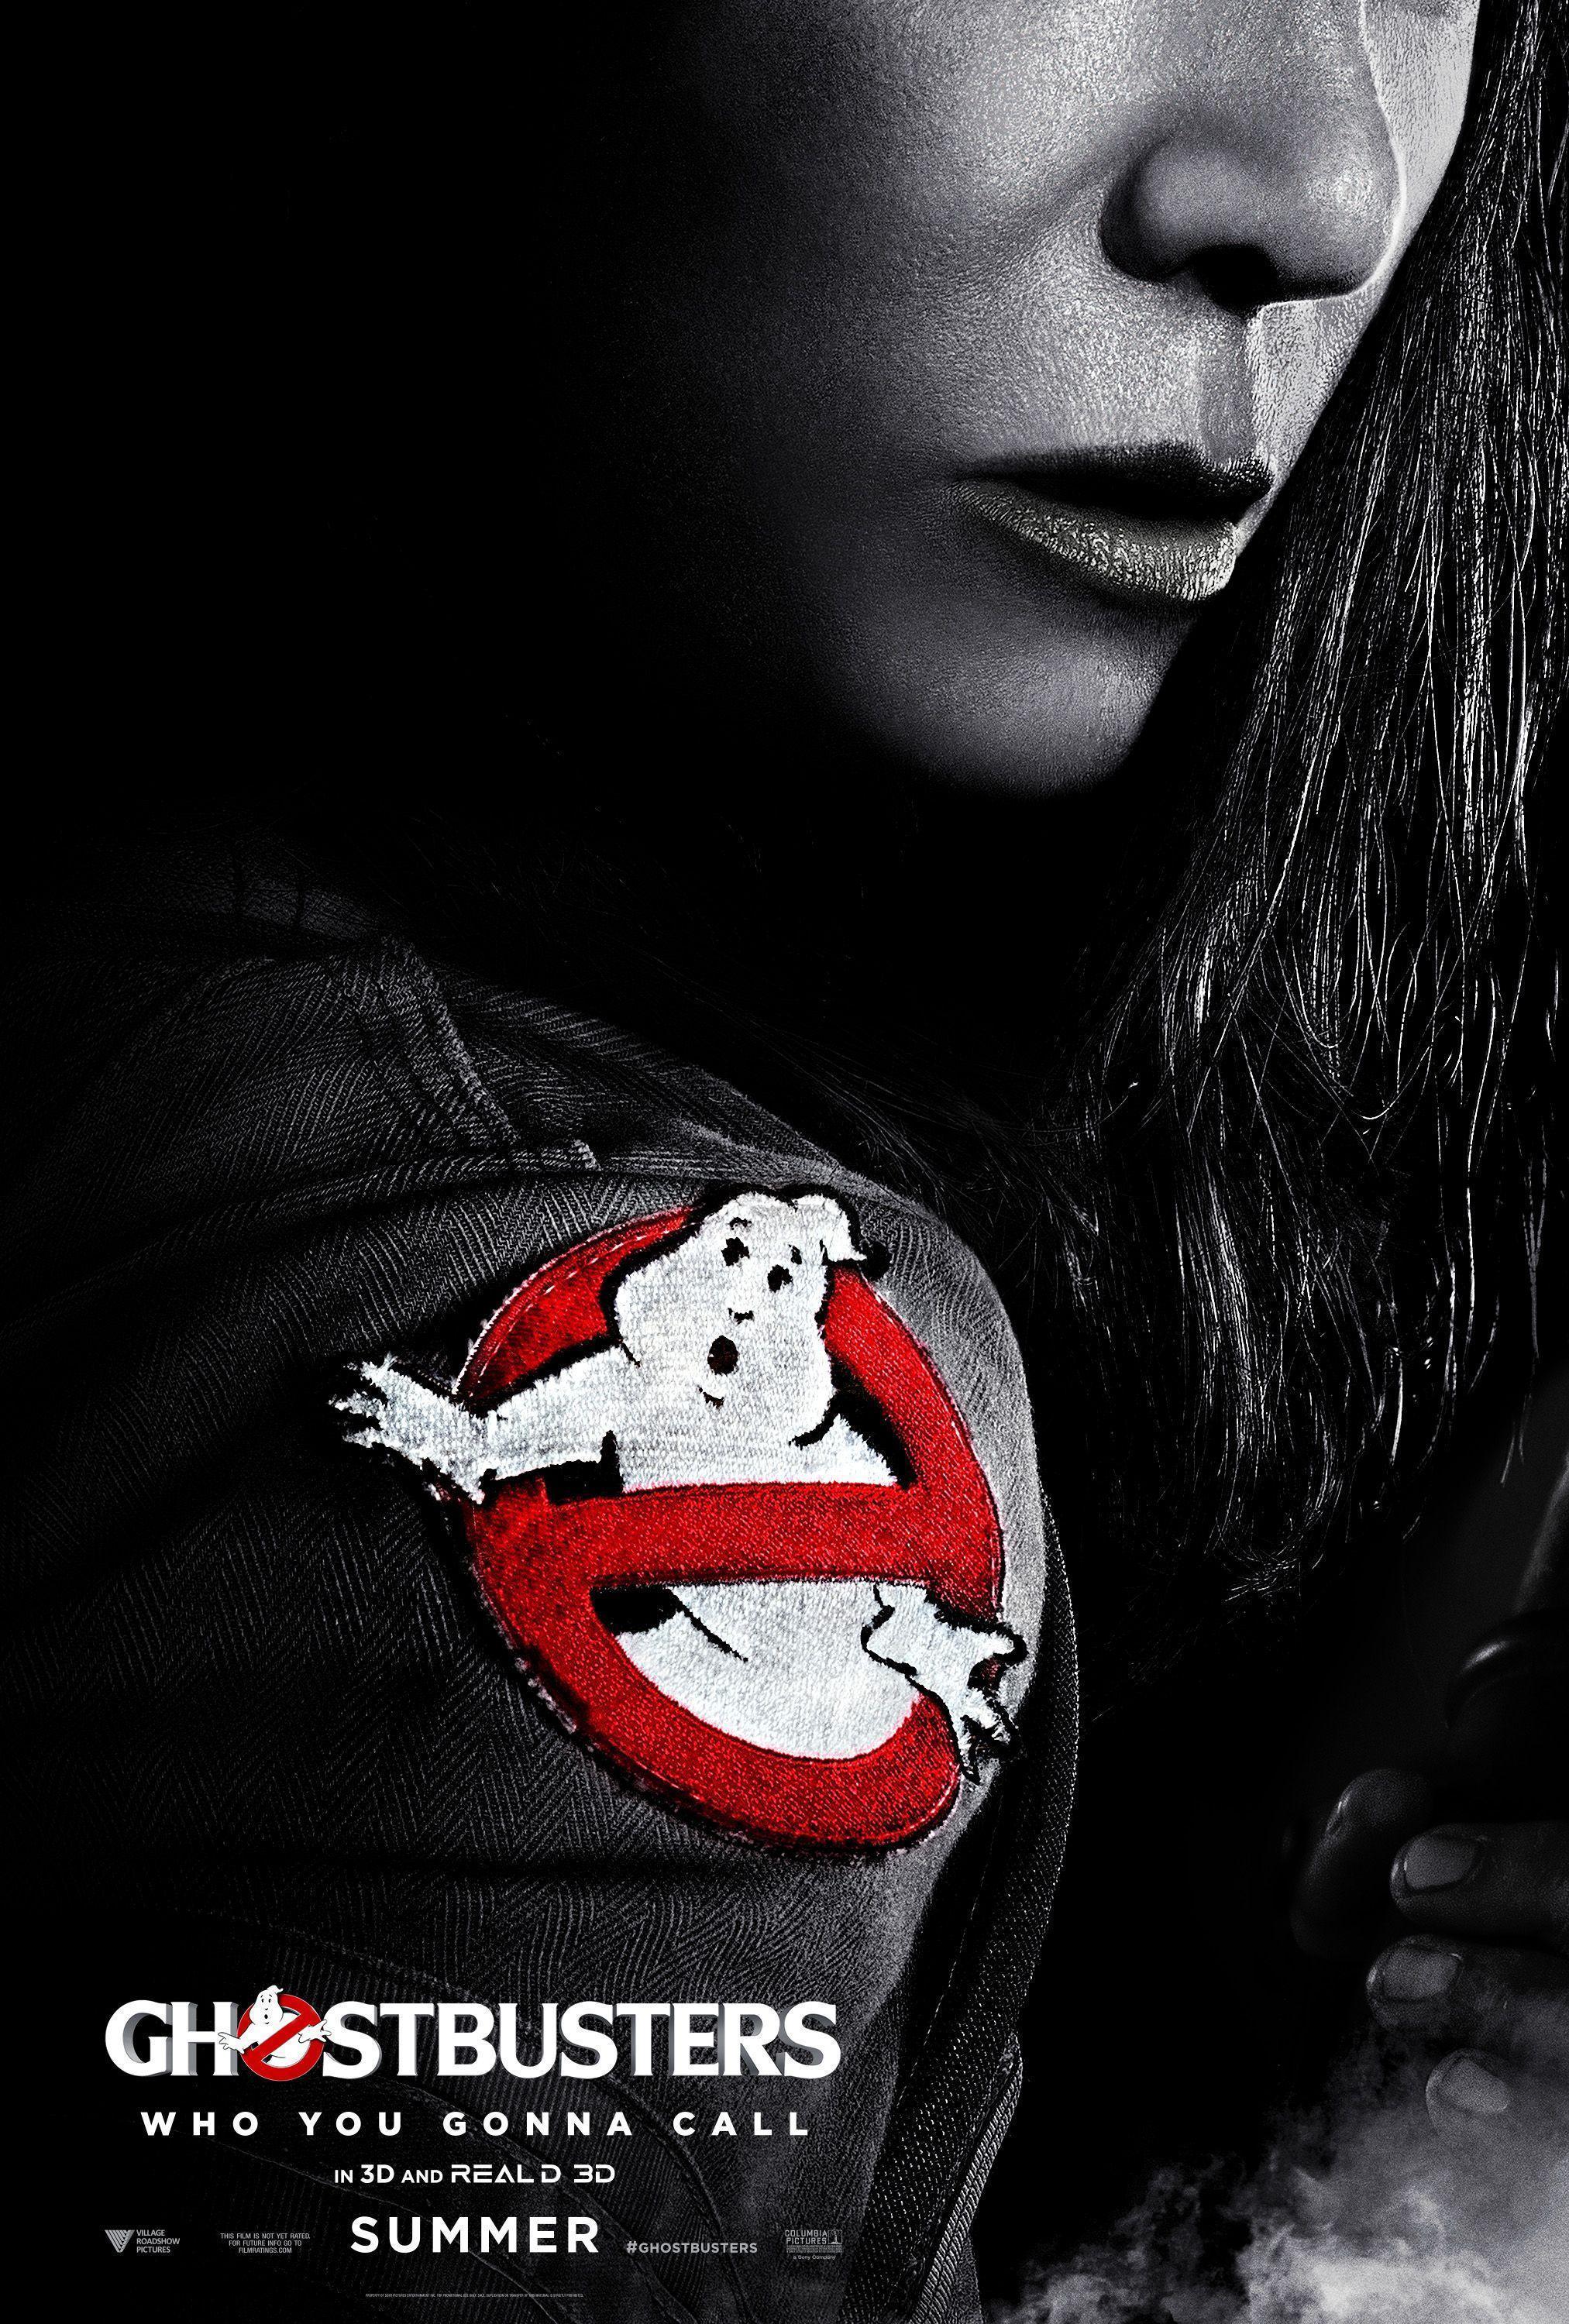 Ghostbusters 2016 Poster Kristen Wiig Poster wallpaper HD 2016